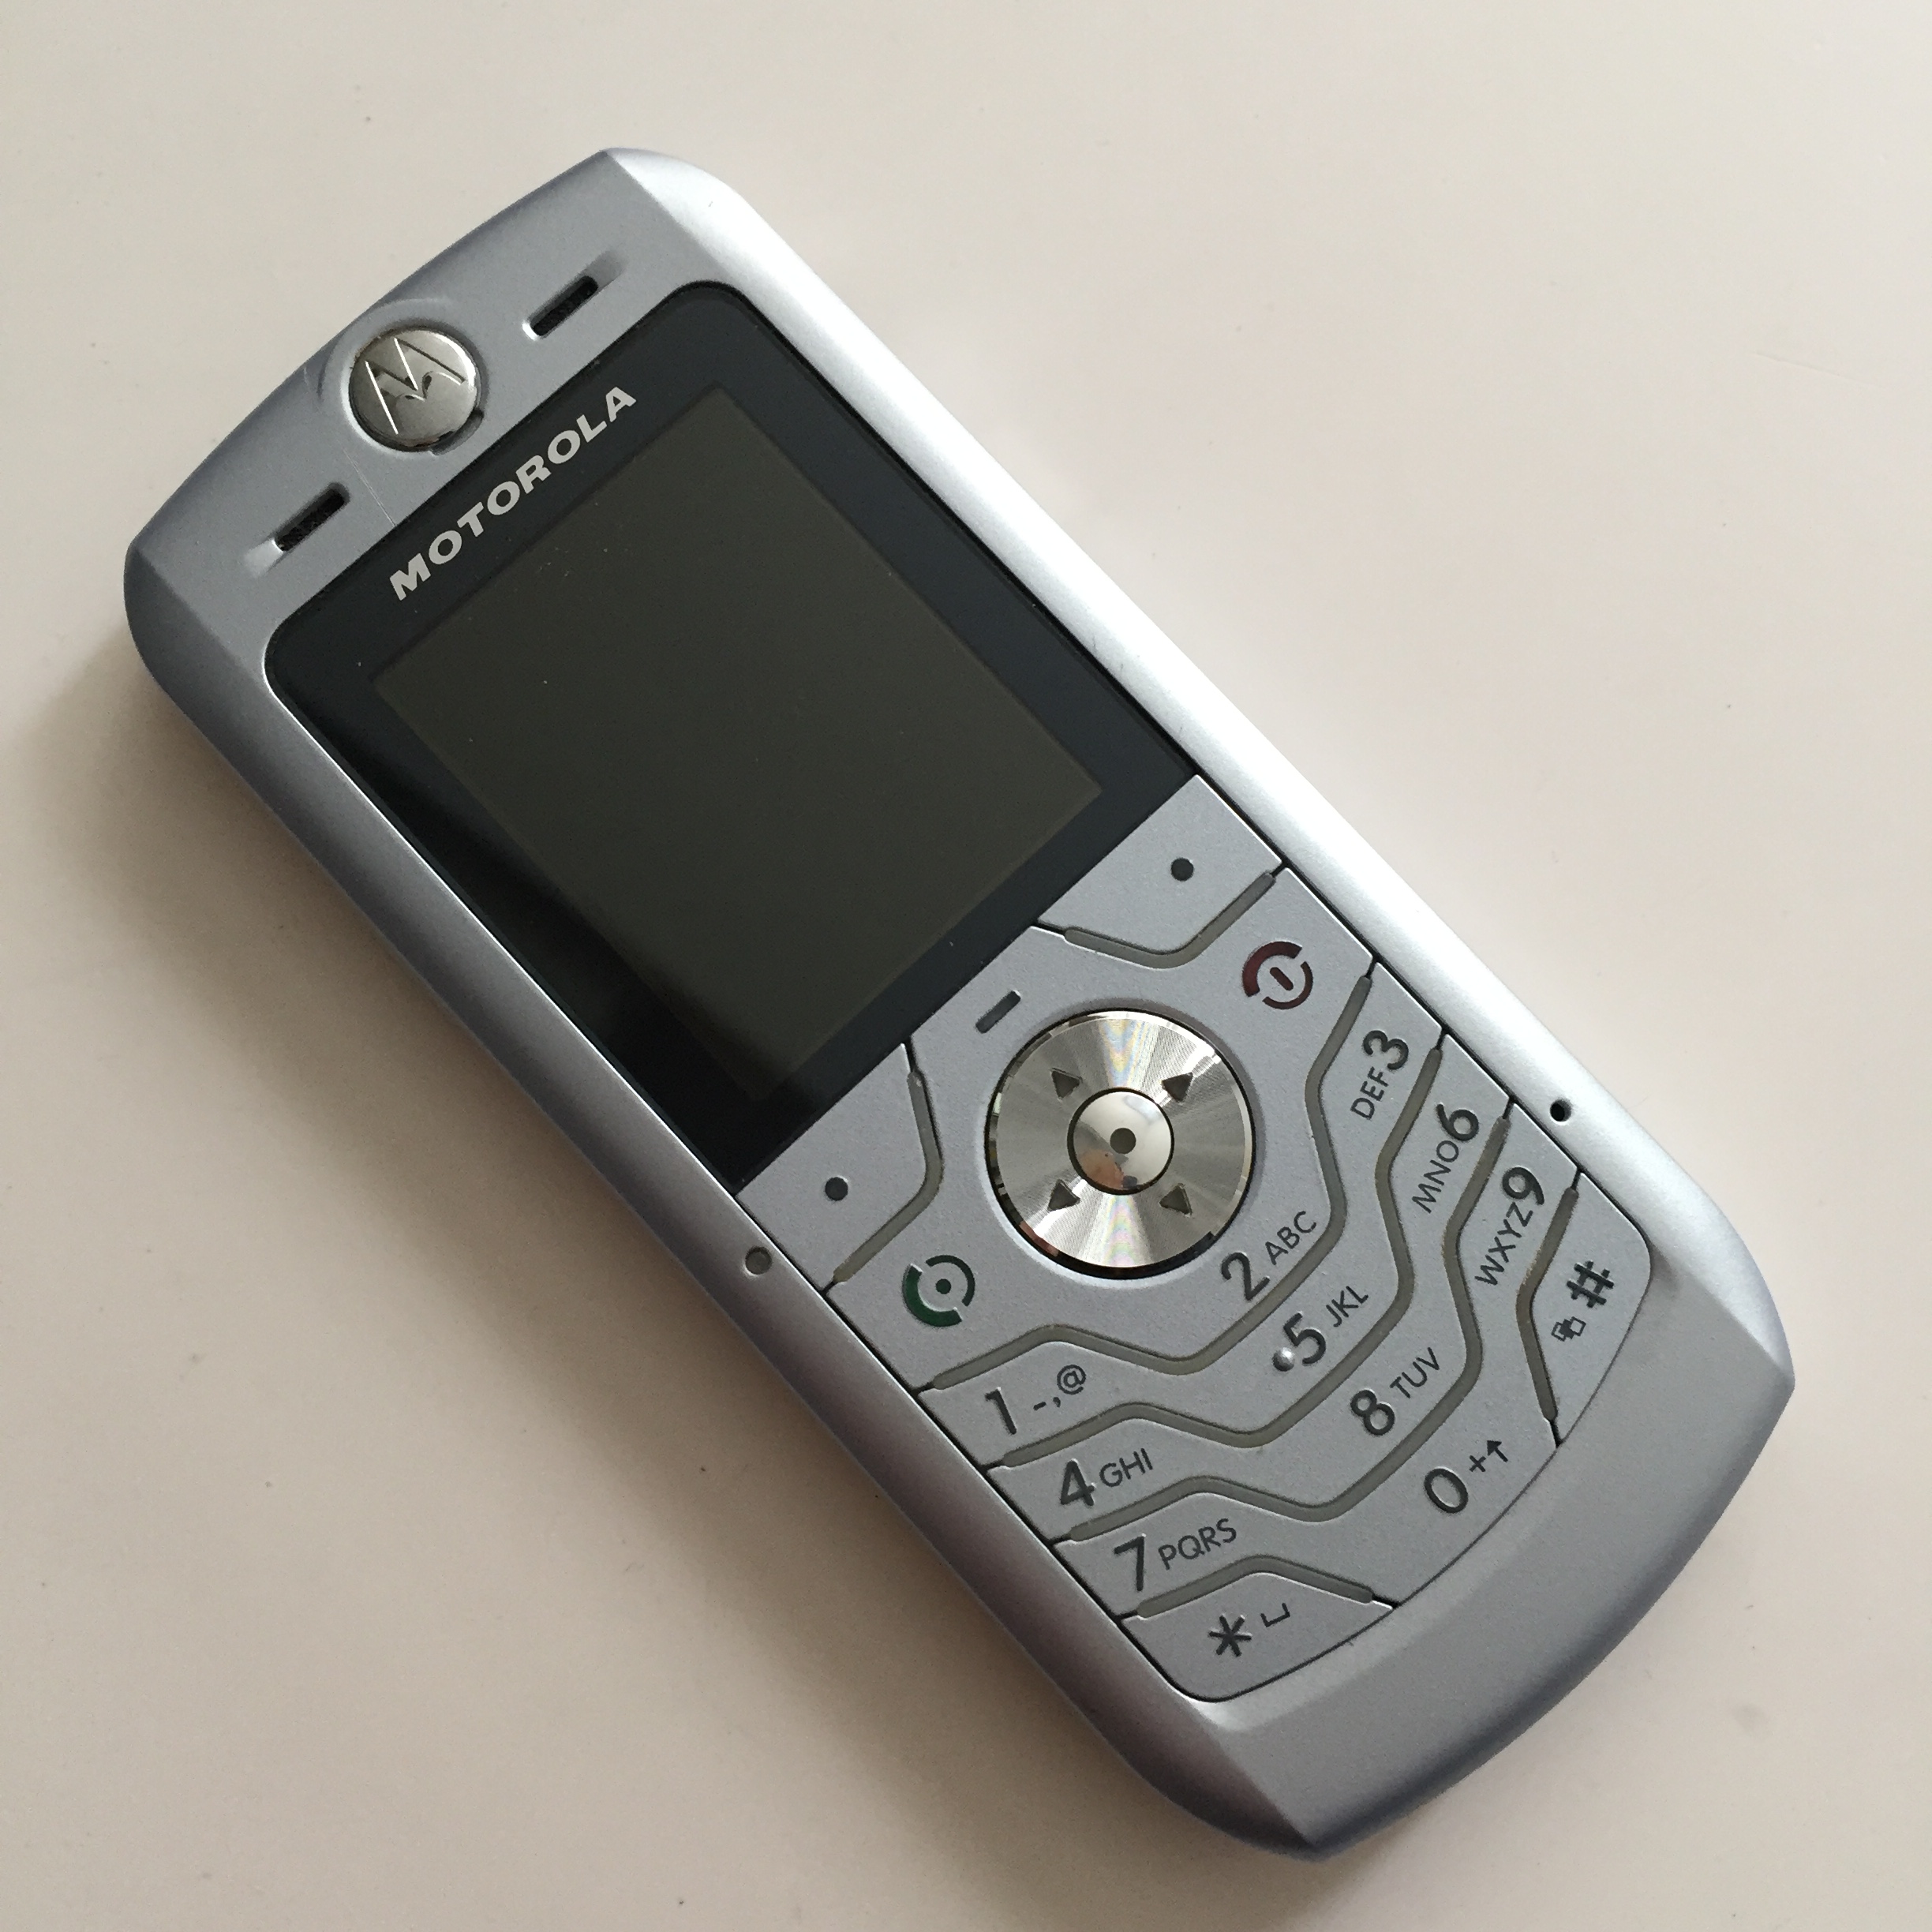 Motorola MILESTONE XT720 ficha tecnica, características - PhonesData